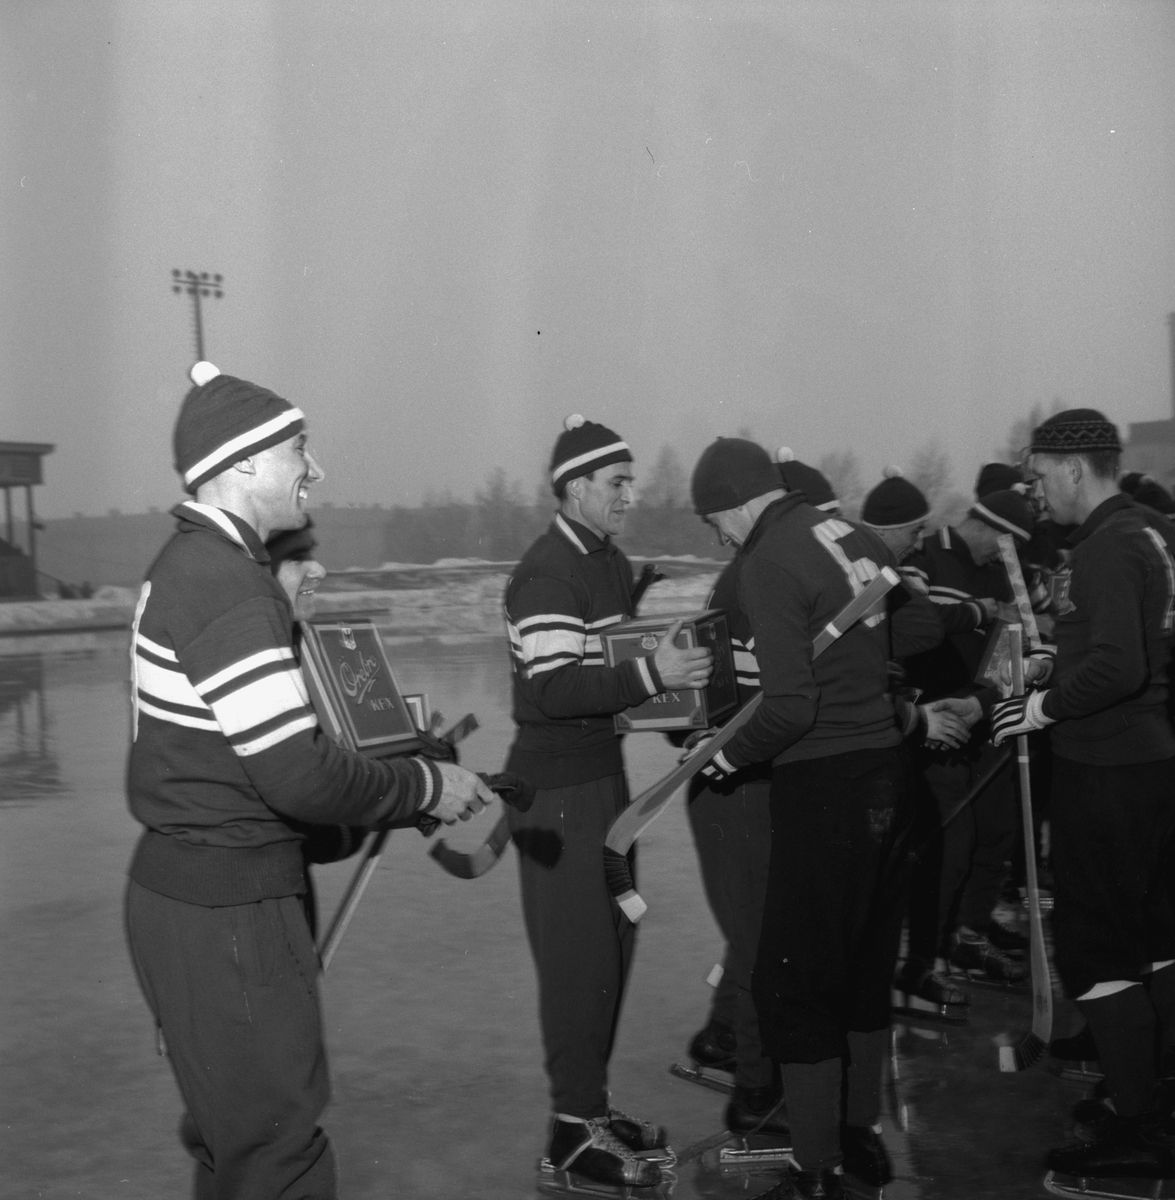 Bandy Närke - Ryssland.
26 februari 1959.